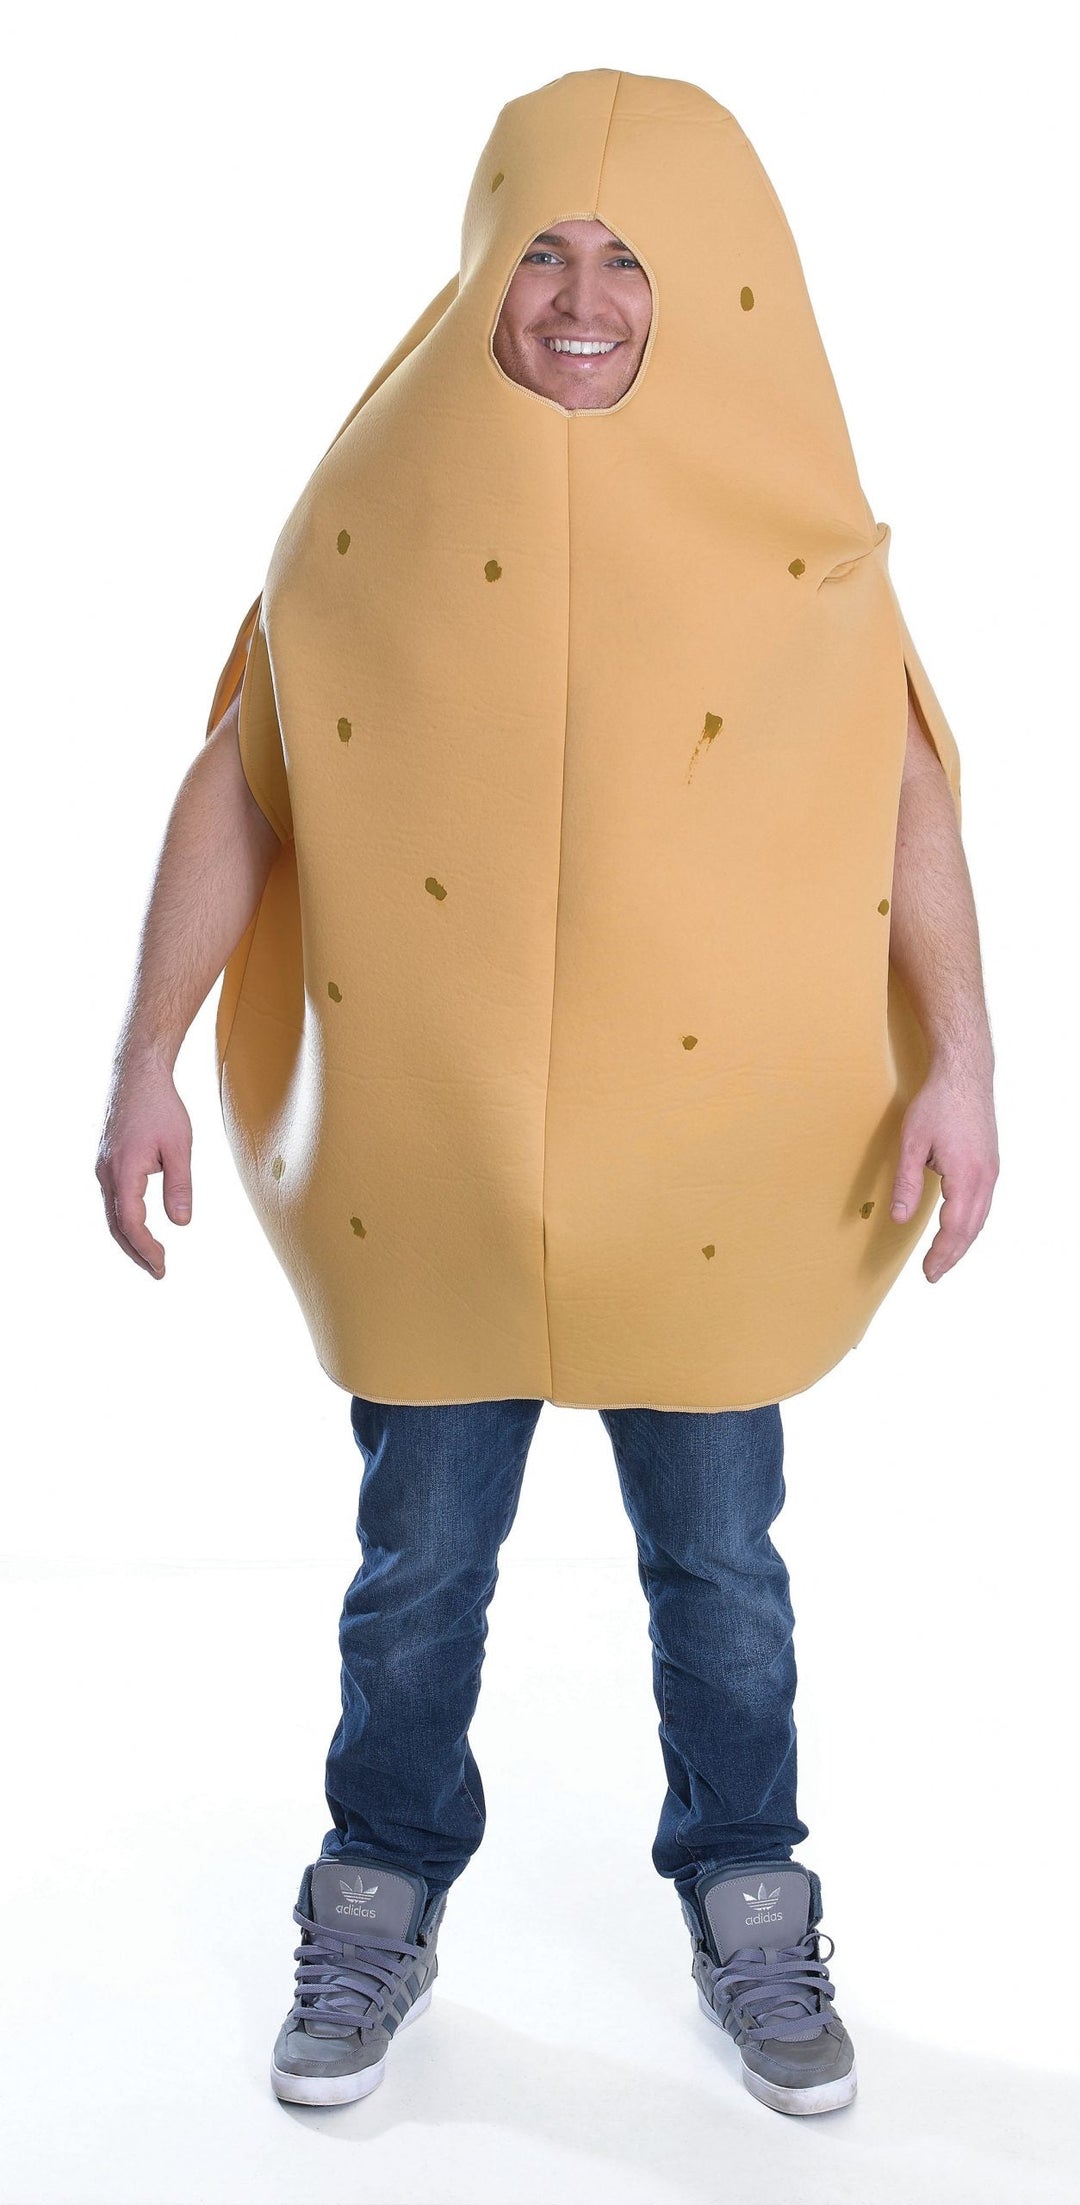 Potato Costume Adult One Size_1